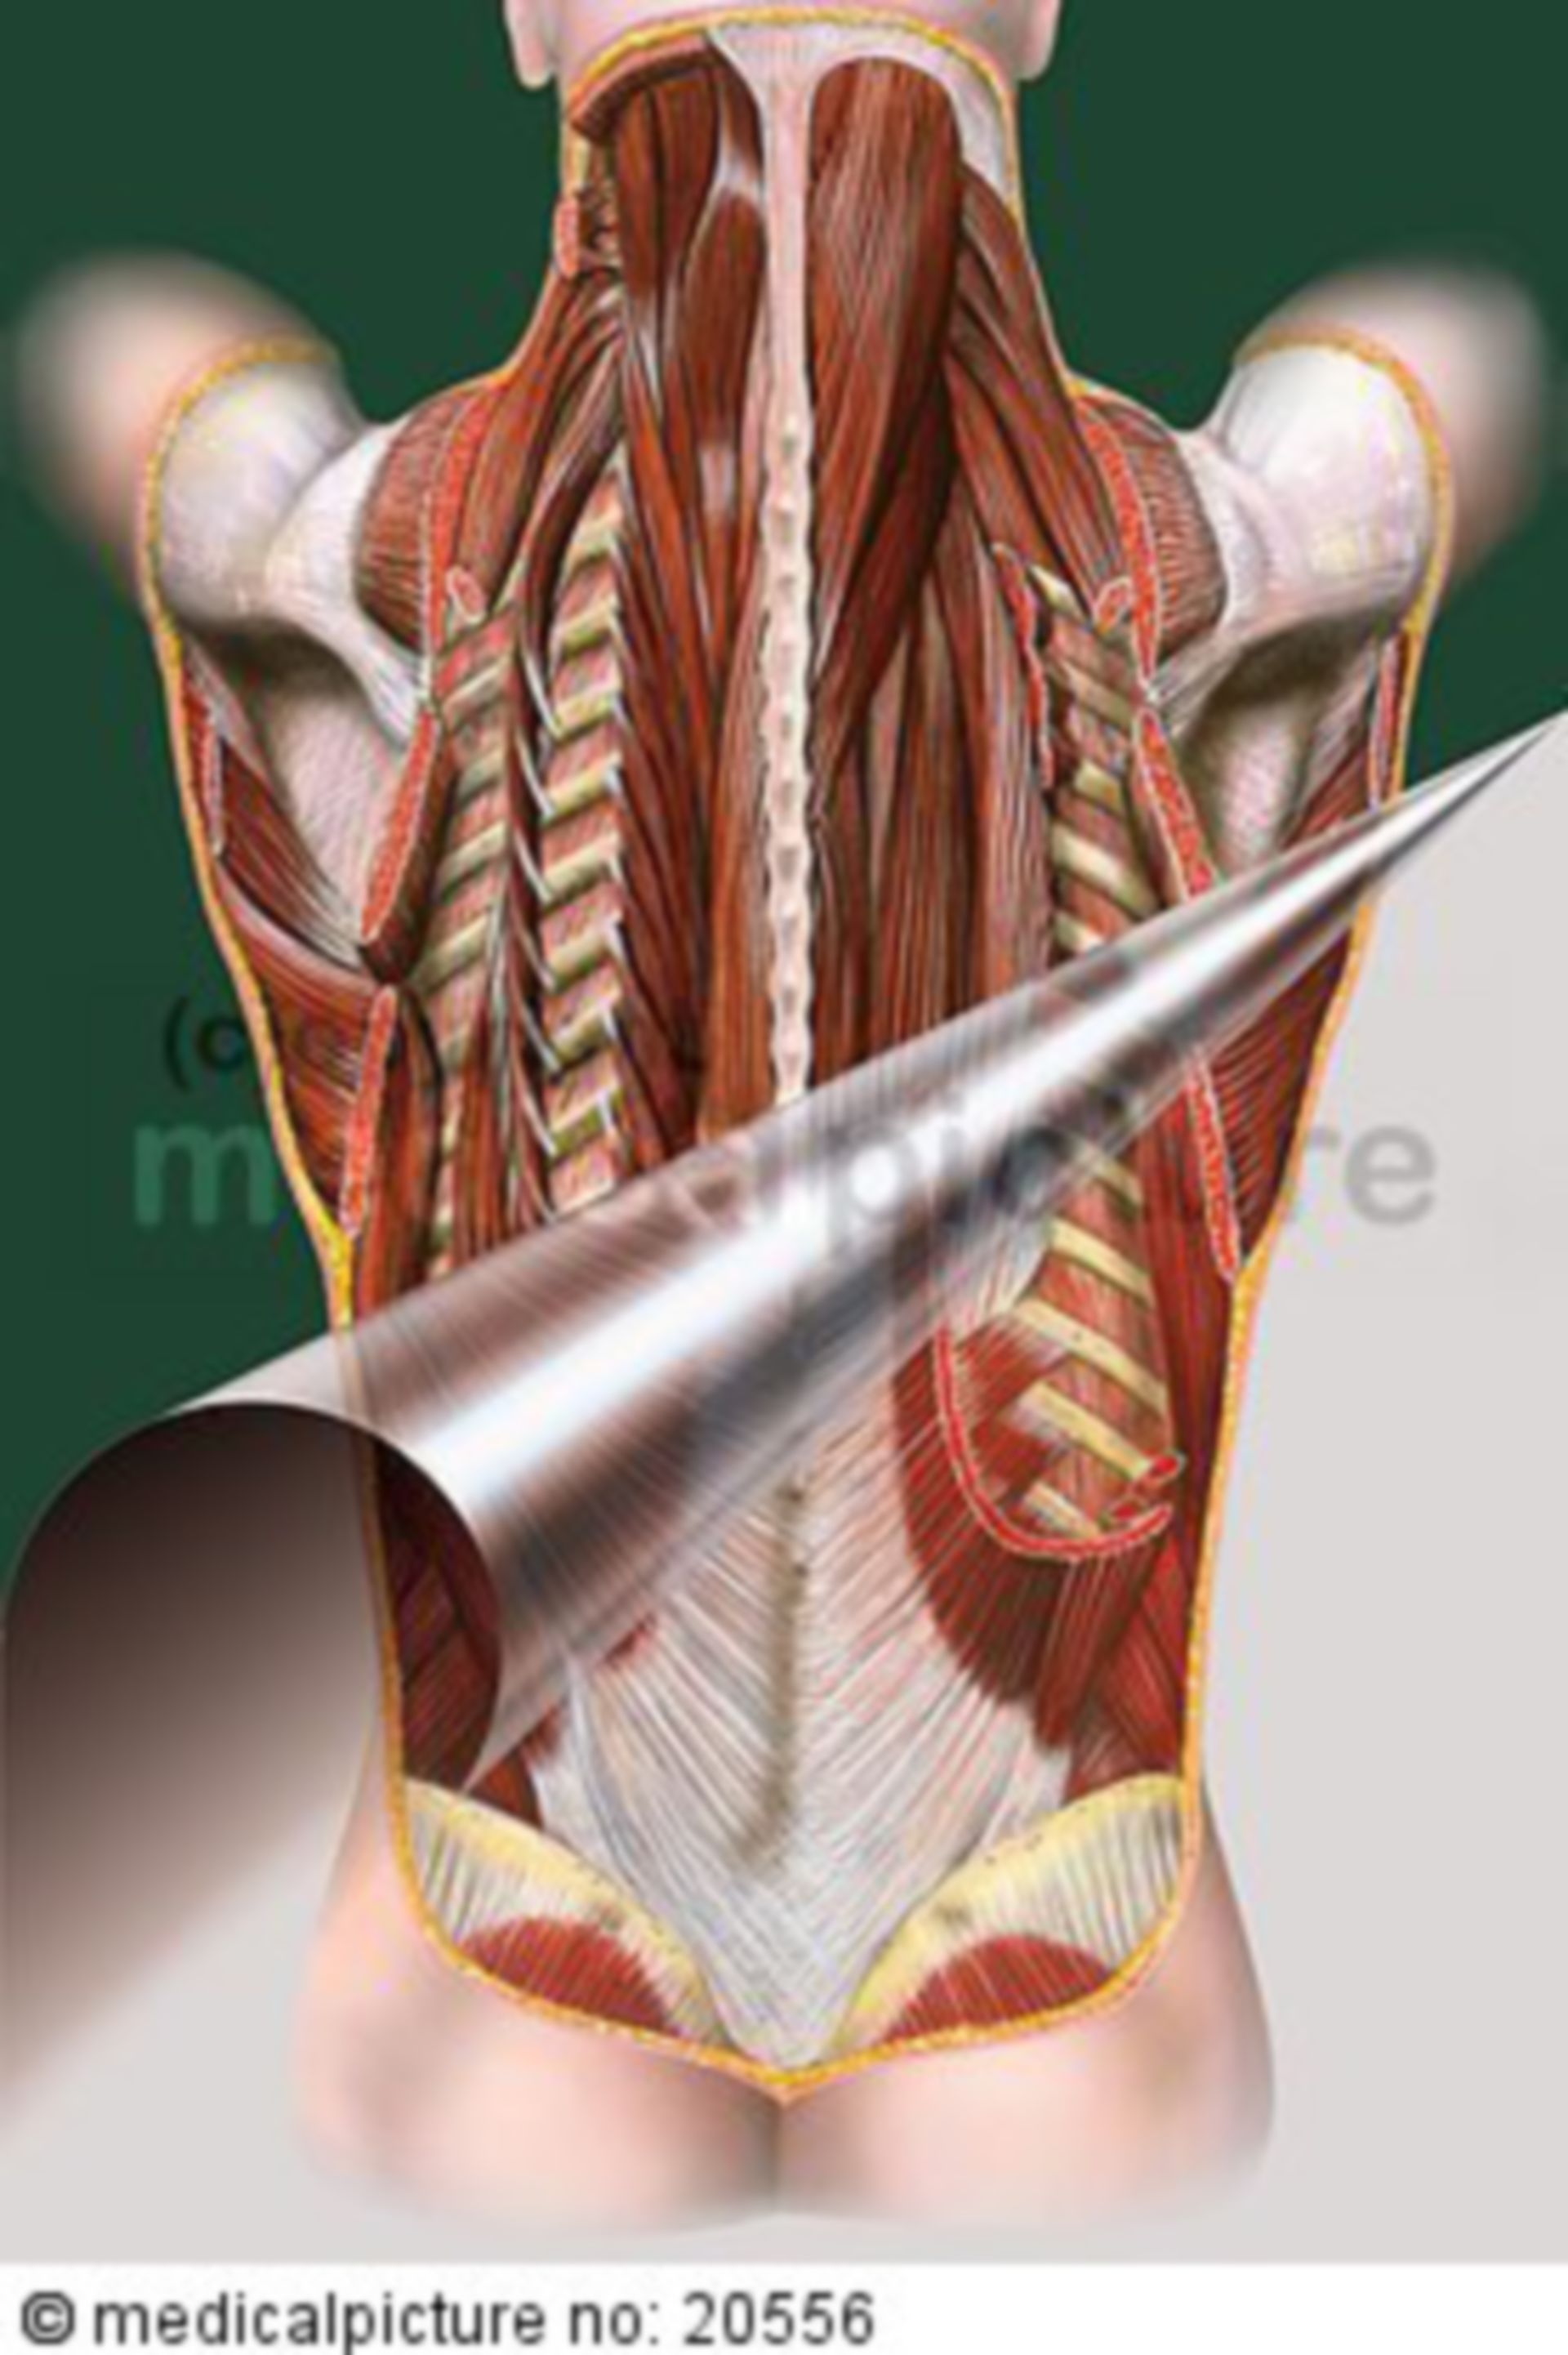  Rückenmuskeln (Mm. dorsi) 
